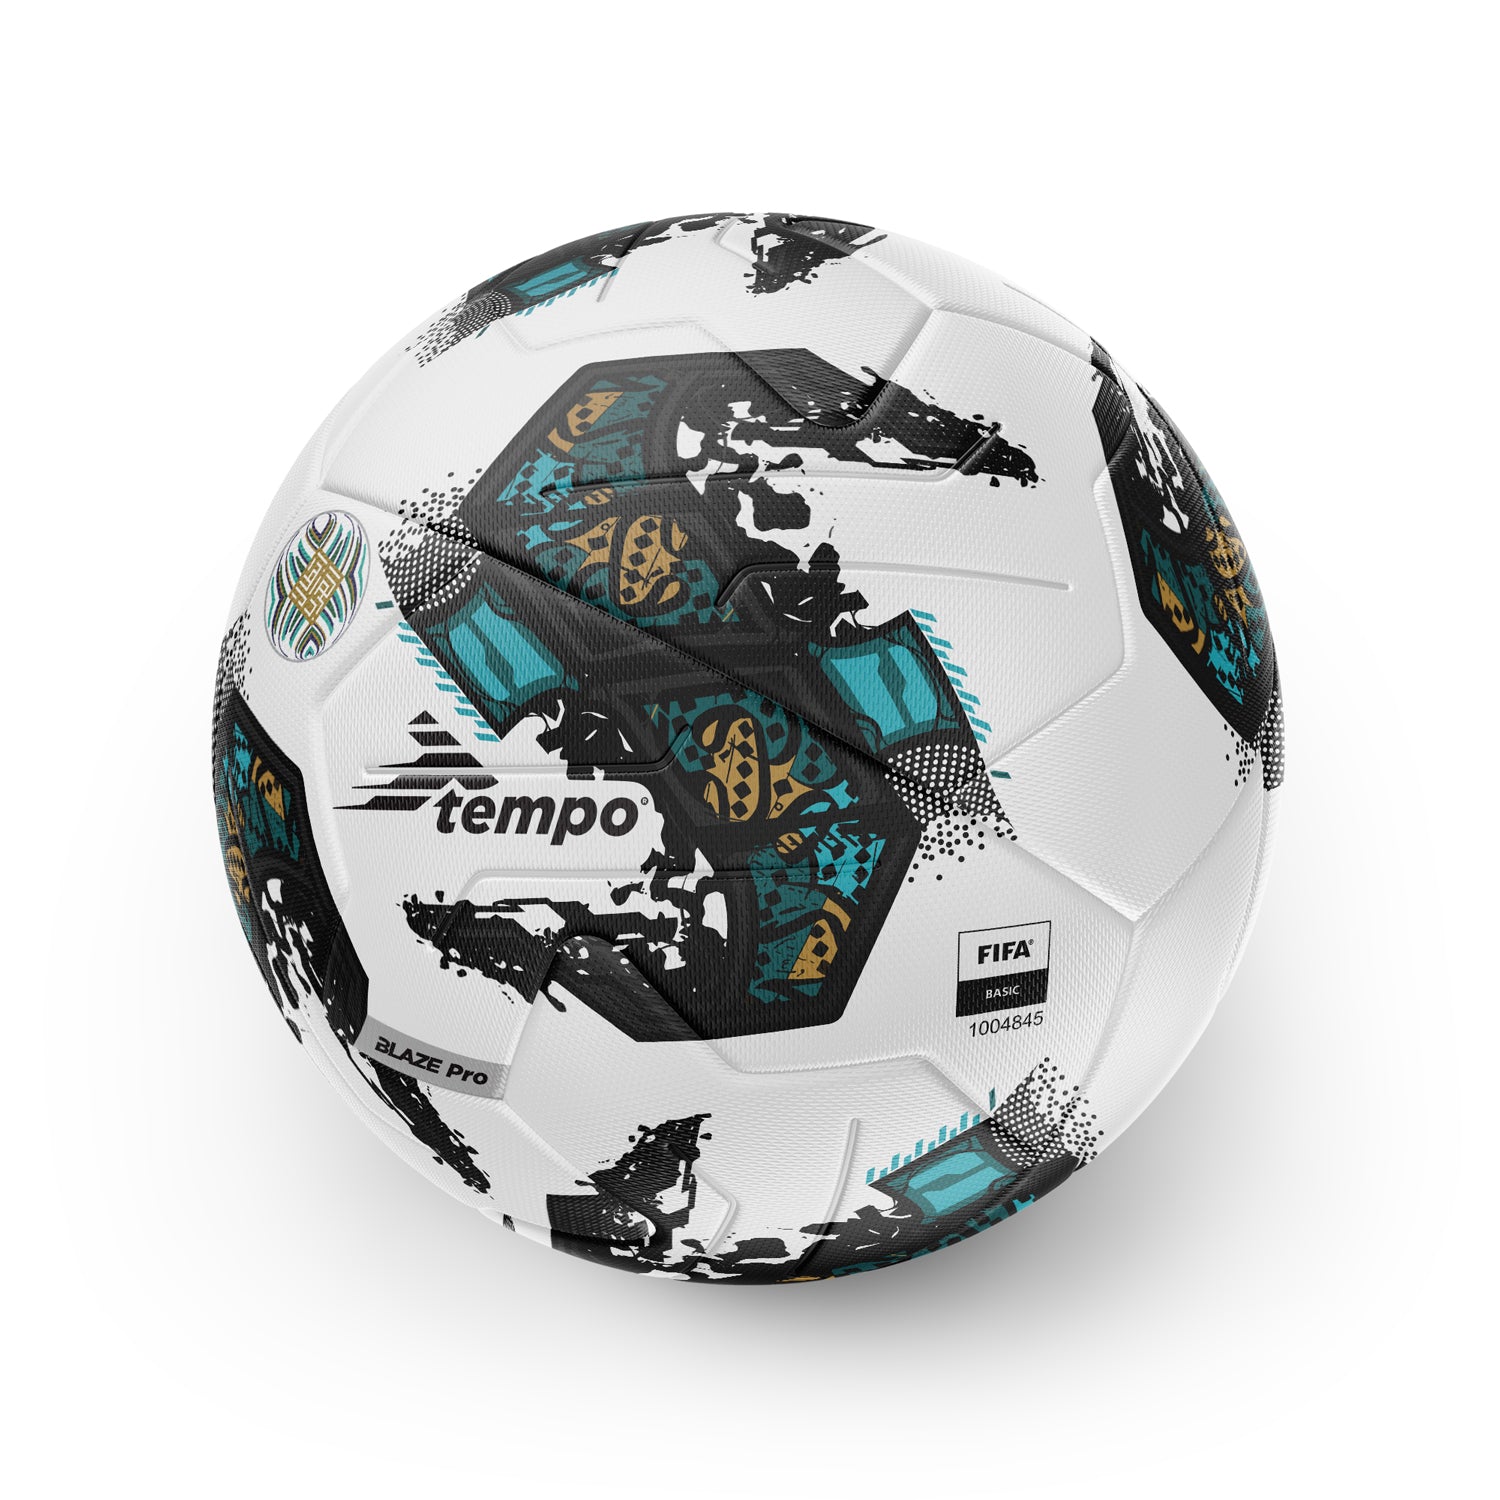 King Salman Cup Official Matchball - Blaze Pro FIFA Basic Size 5